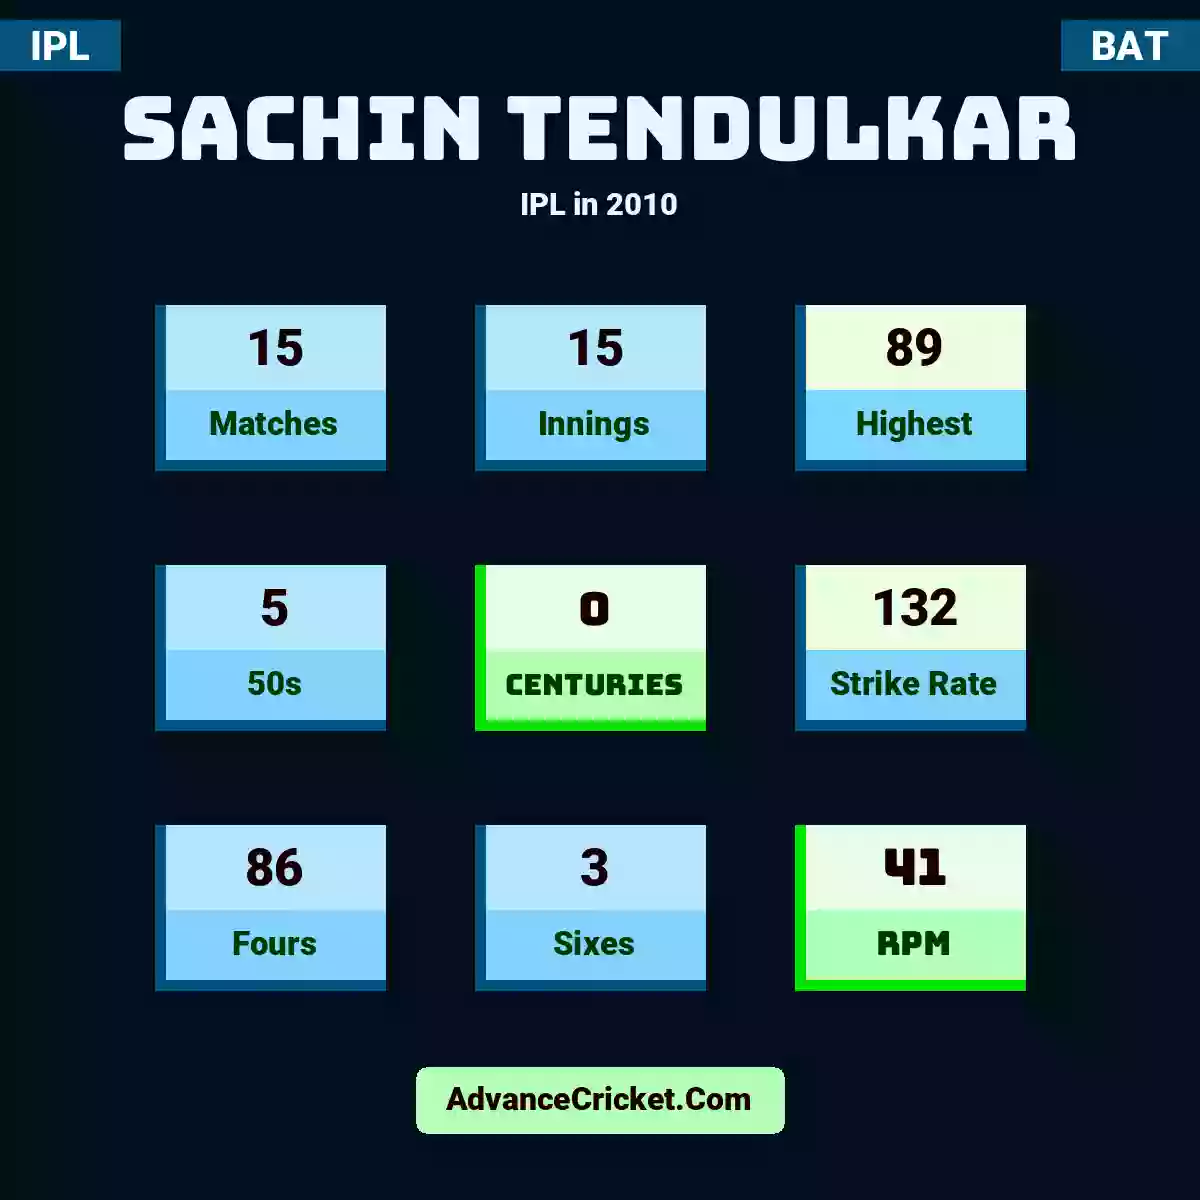 Sachin Tendulkar IPL  in 2010, Sachin Tendulkar played 15 matches, scored 89 runs as highest, 5 half-centuries, and 0 centuries, with a strike rate of 132. S.Tendulkar hit 86 fours and 3 sixes, with an RPM of 41.